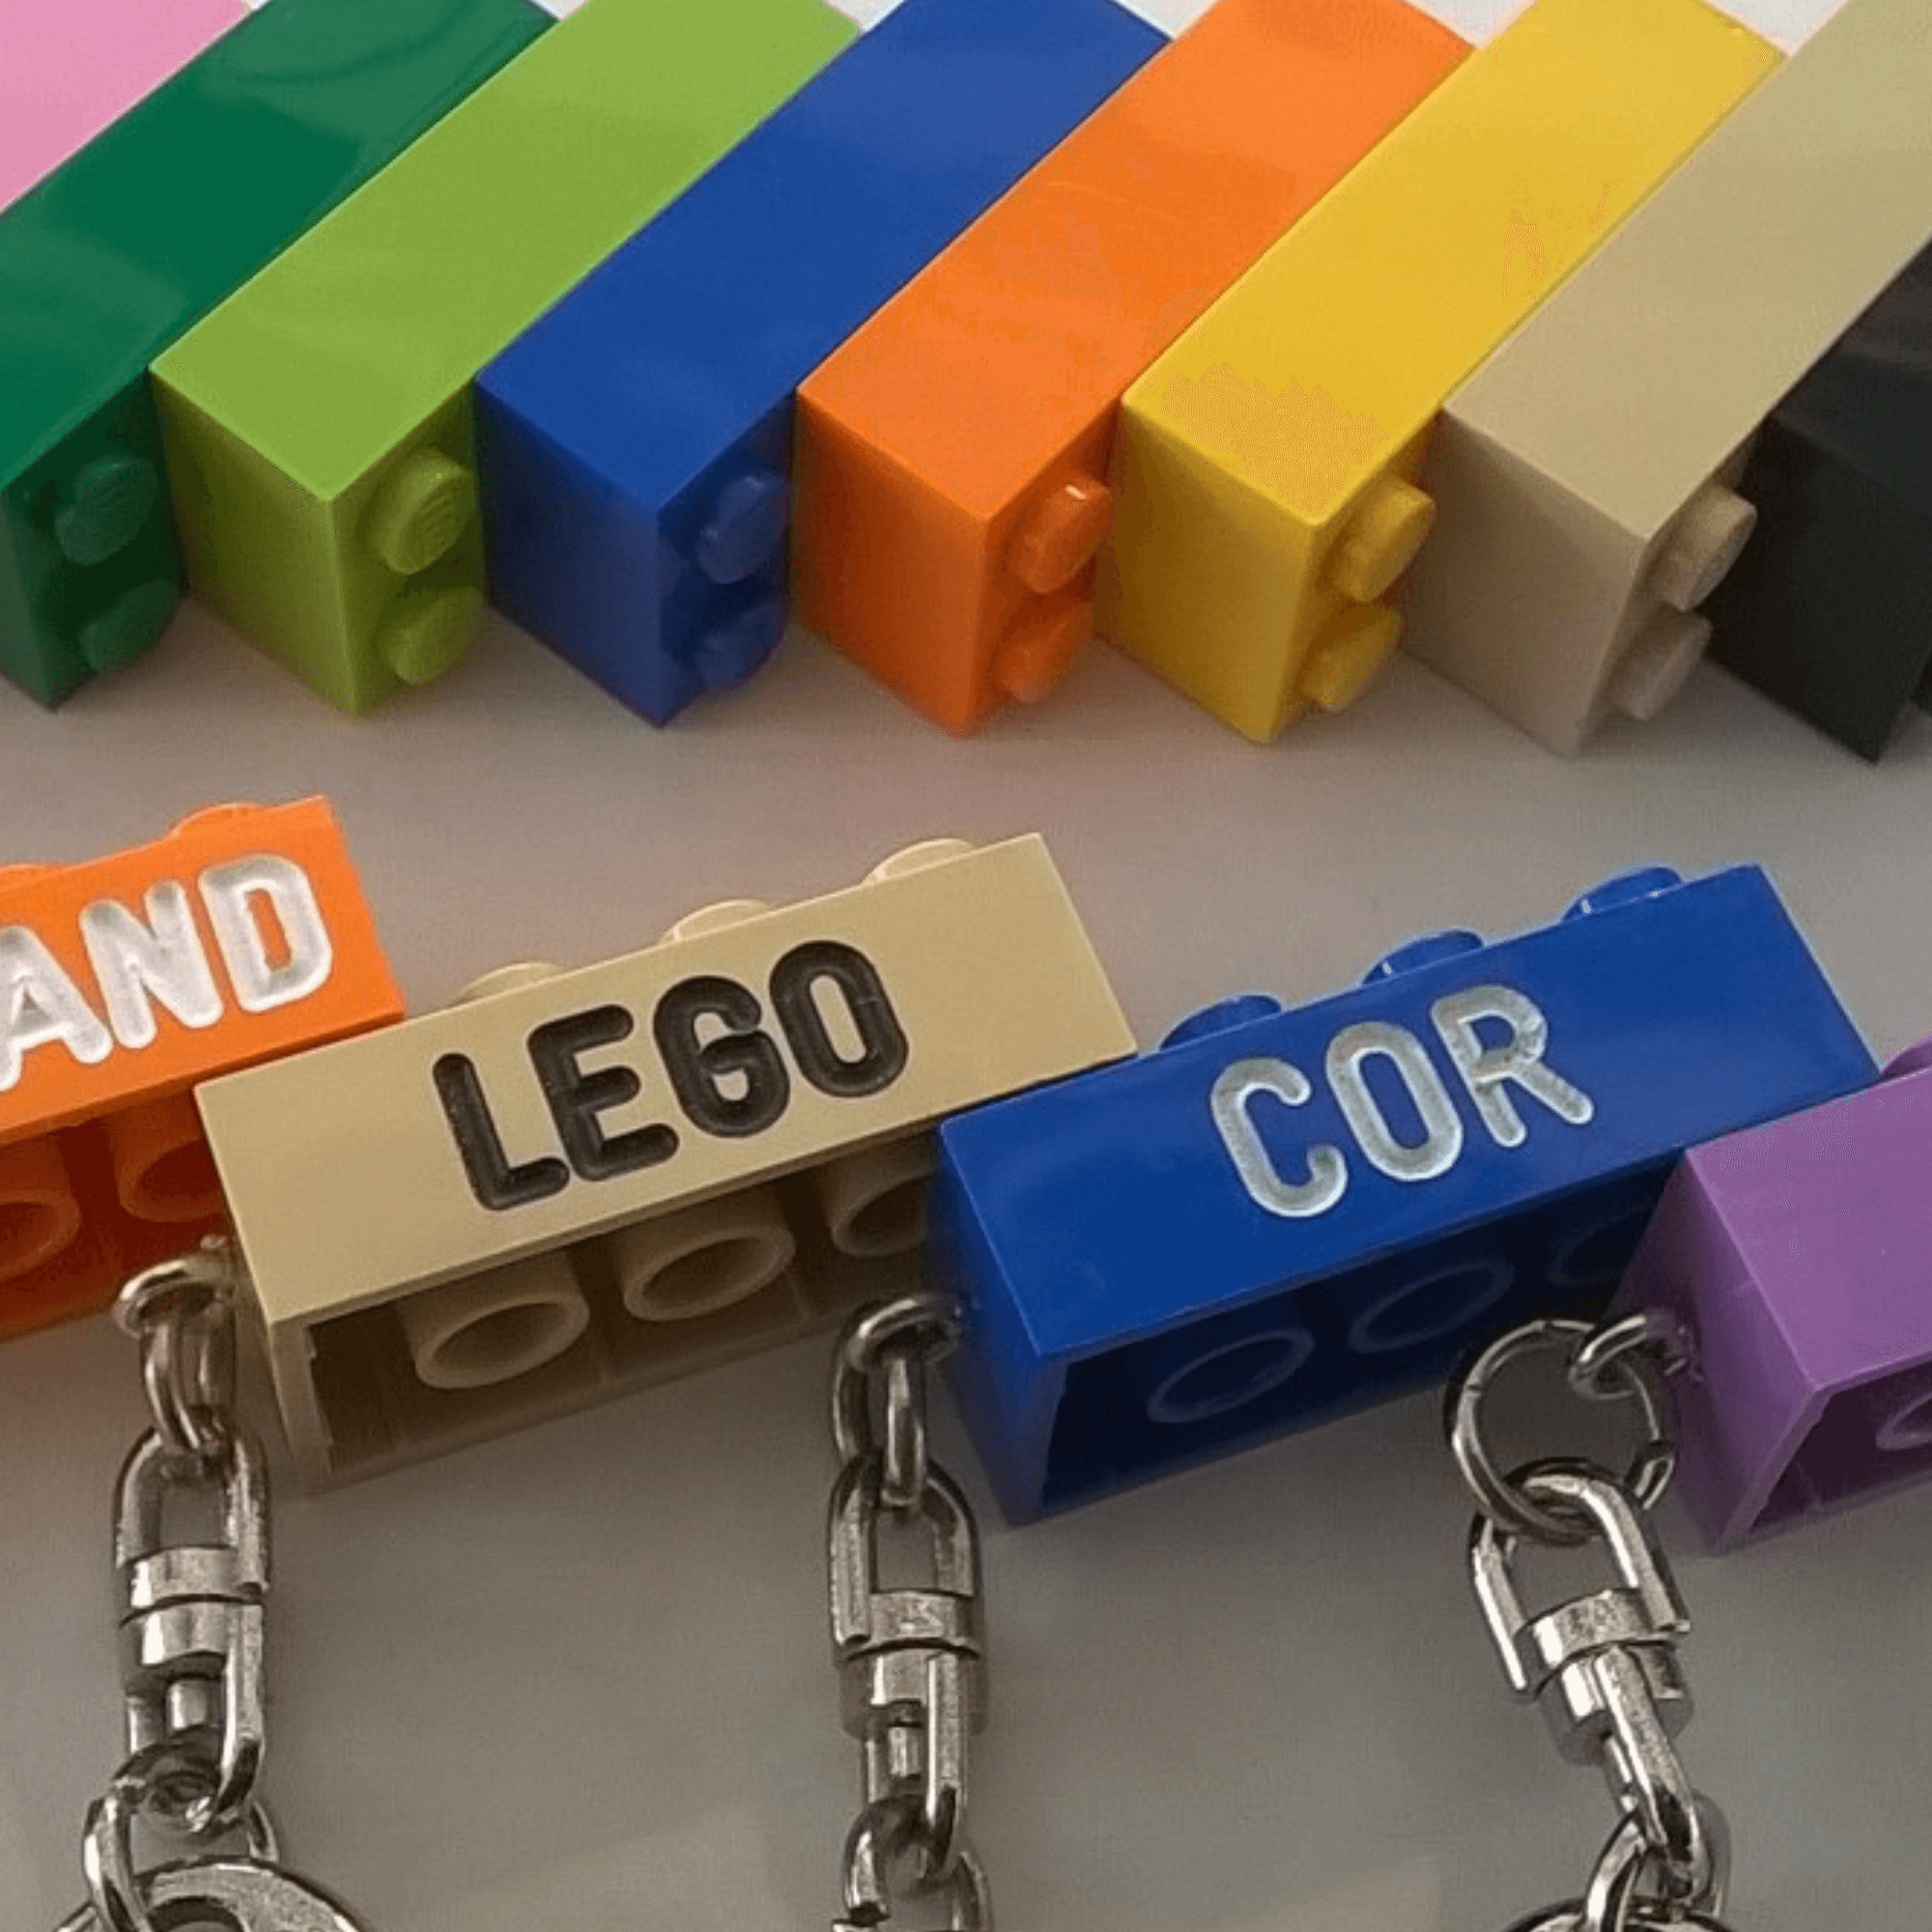 Legoblokje met naam of leuke tekst